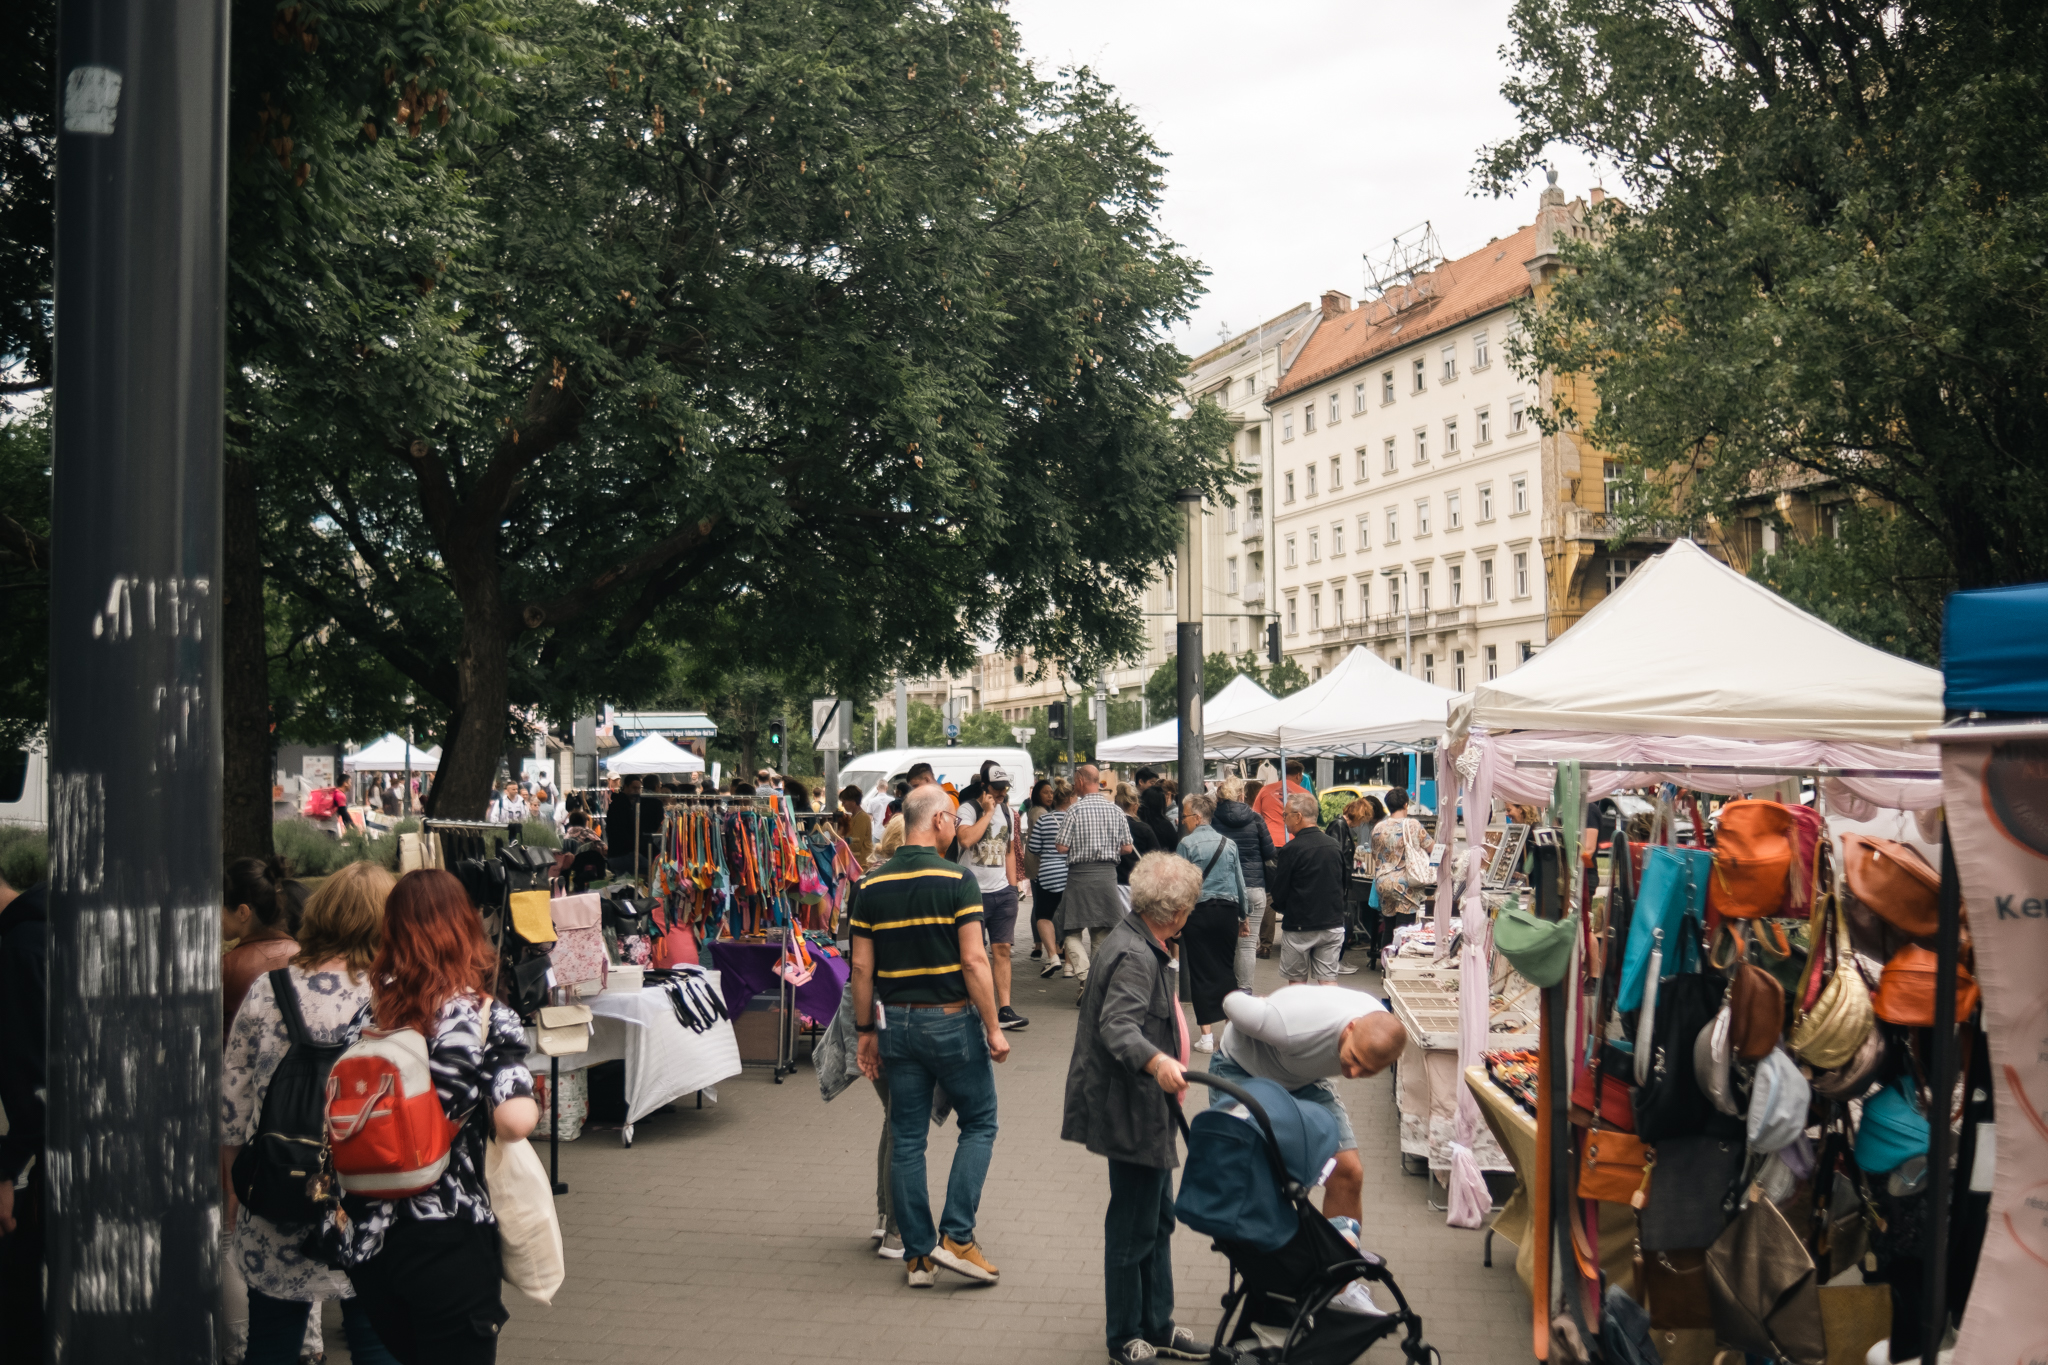 'Day of Markets', Erzsébet & Deák Squares in Budapest, 18 September